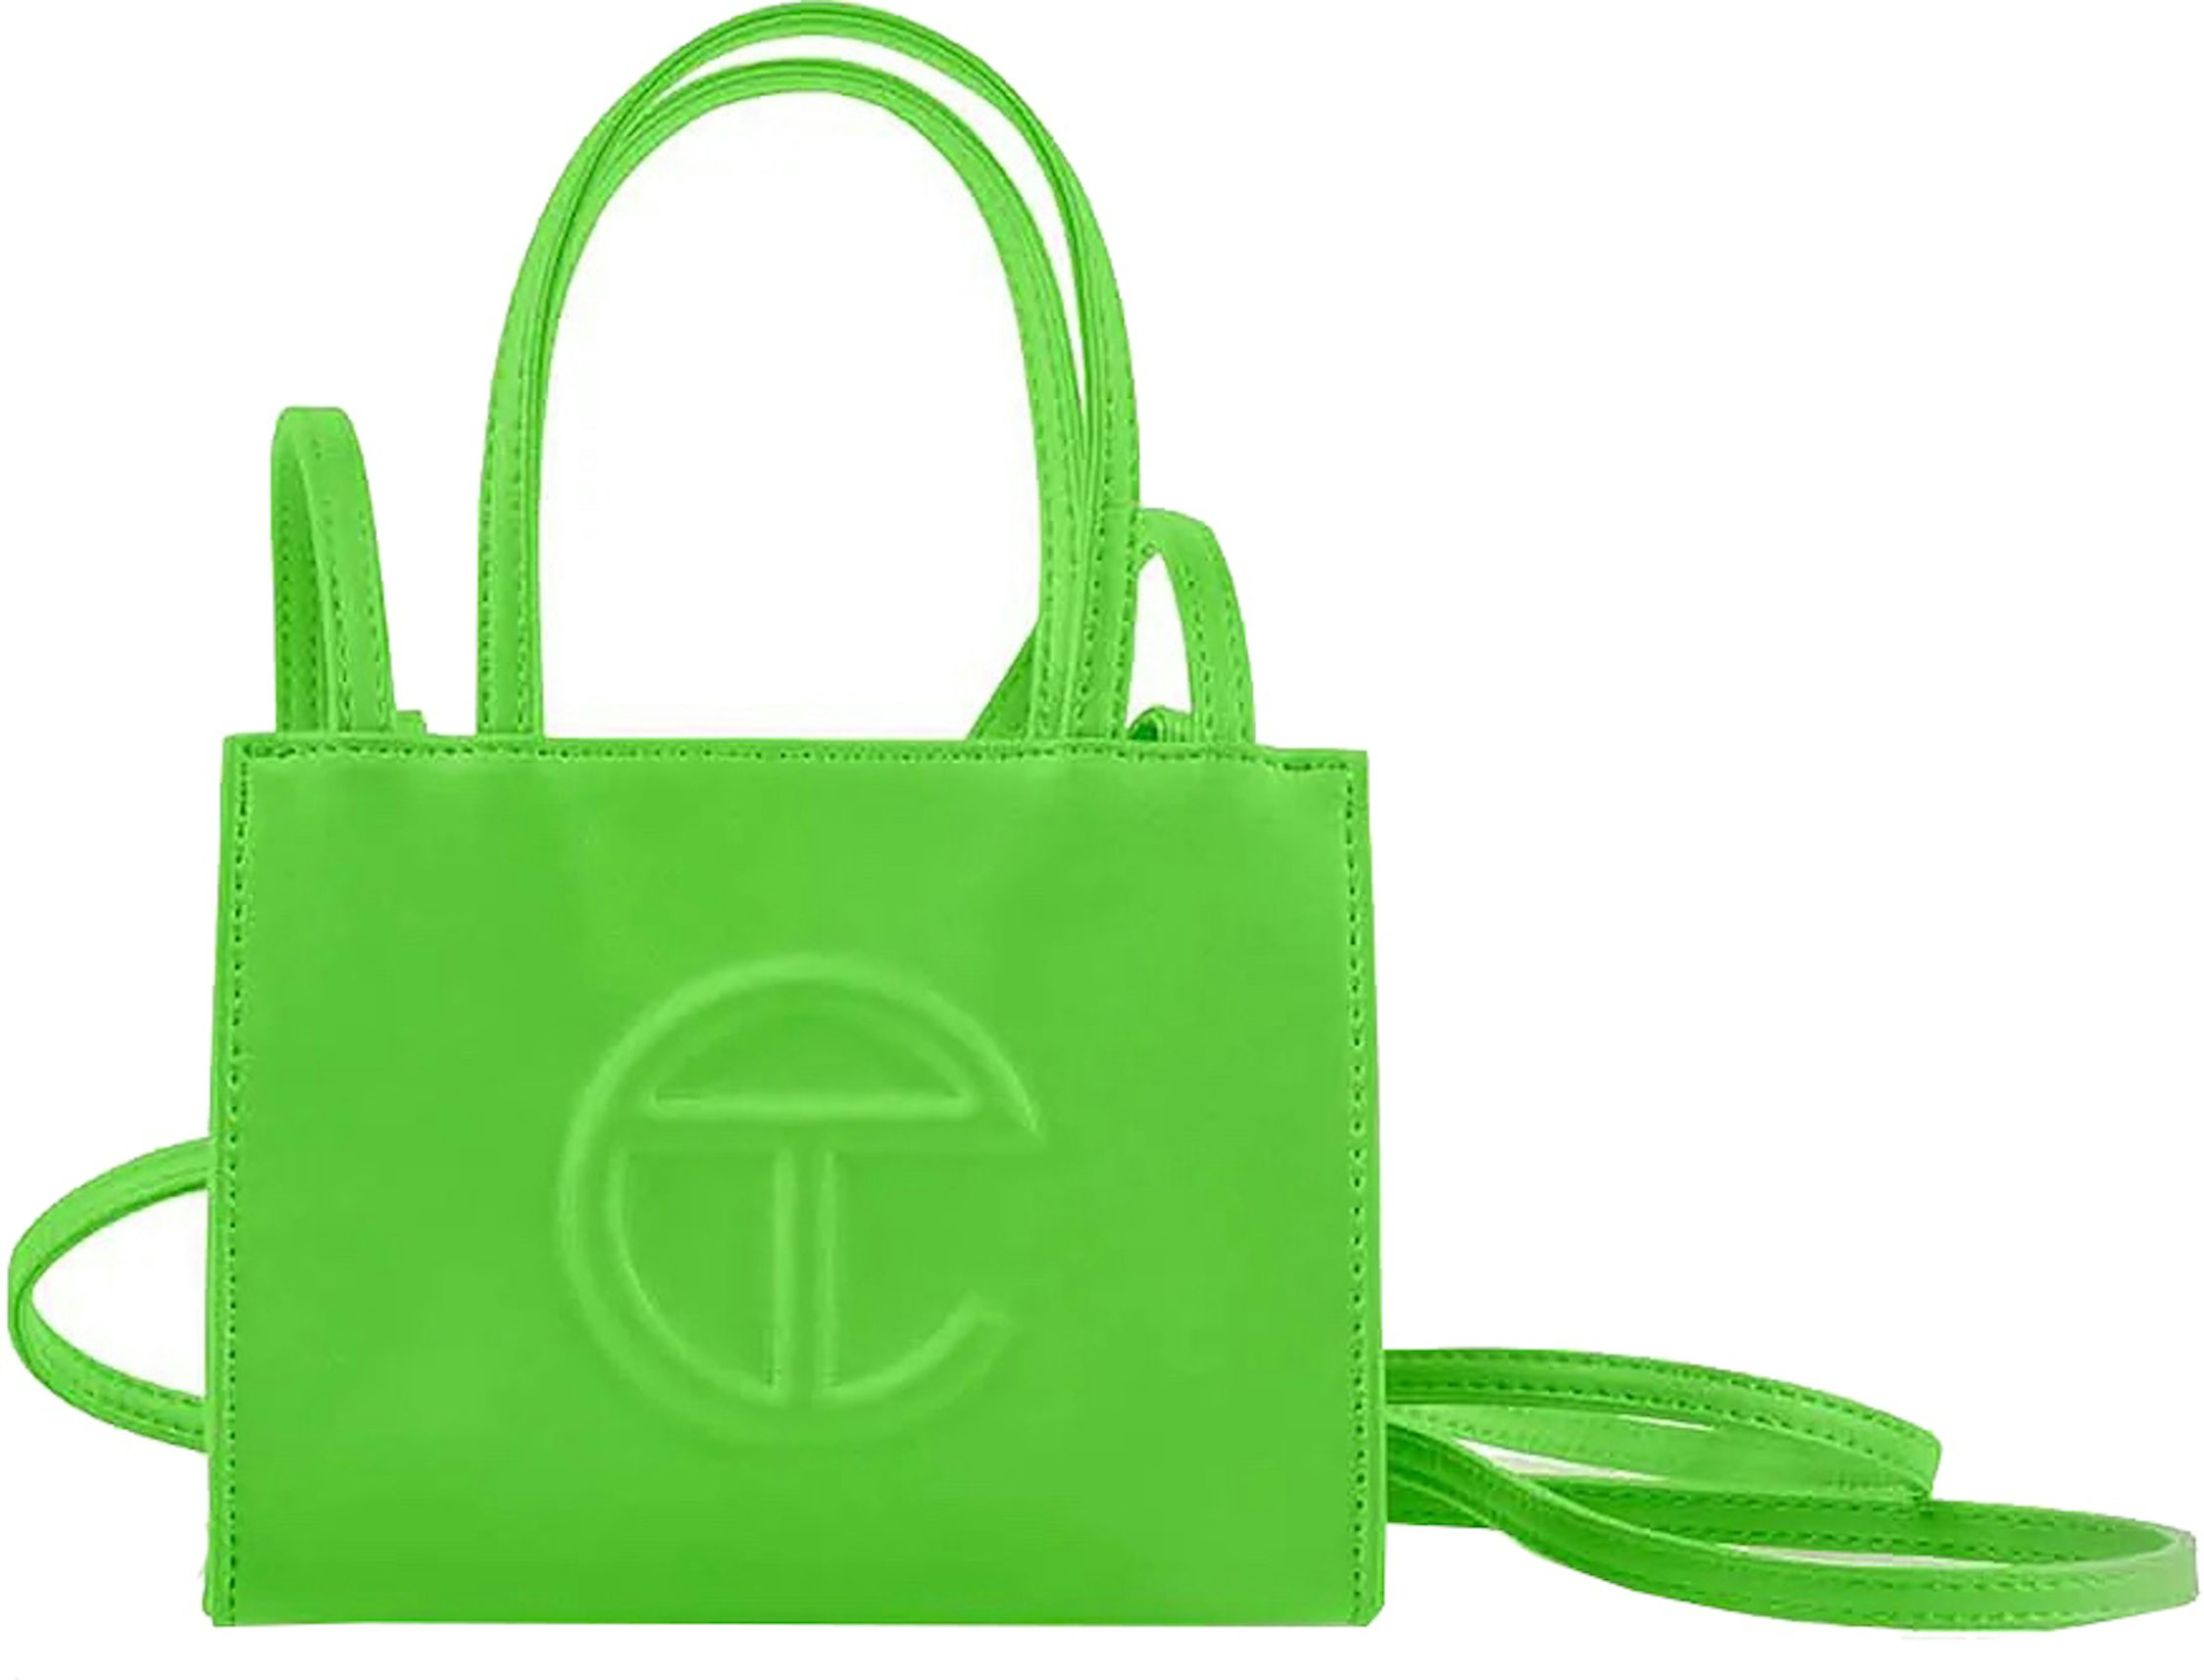 Telfar (Small) Cream Shopping Bag - Brand New with Tags